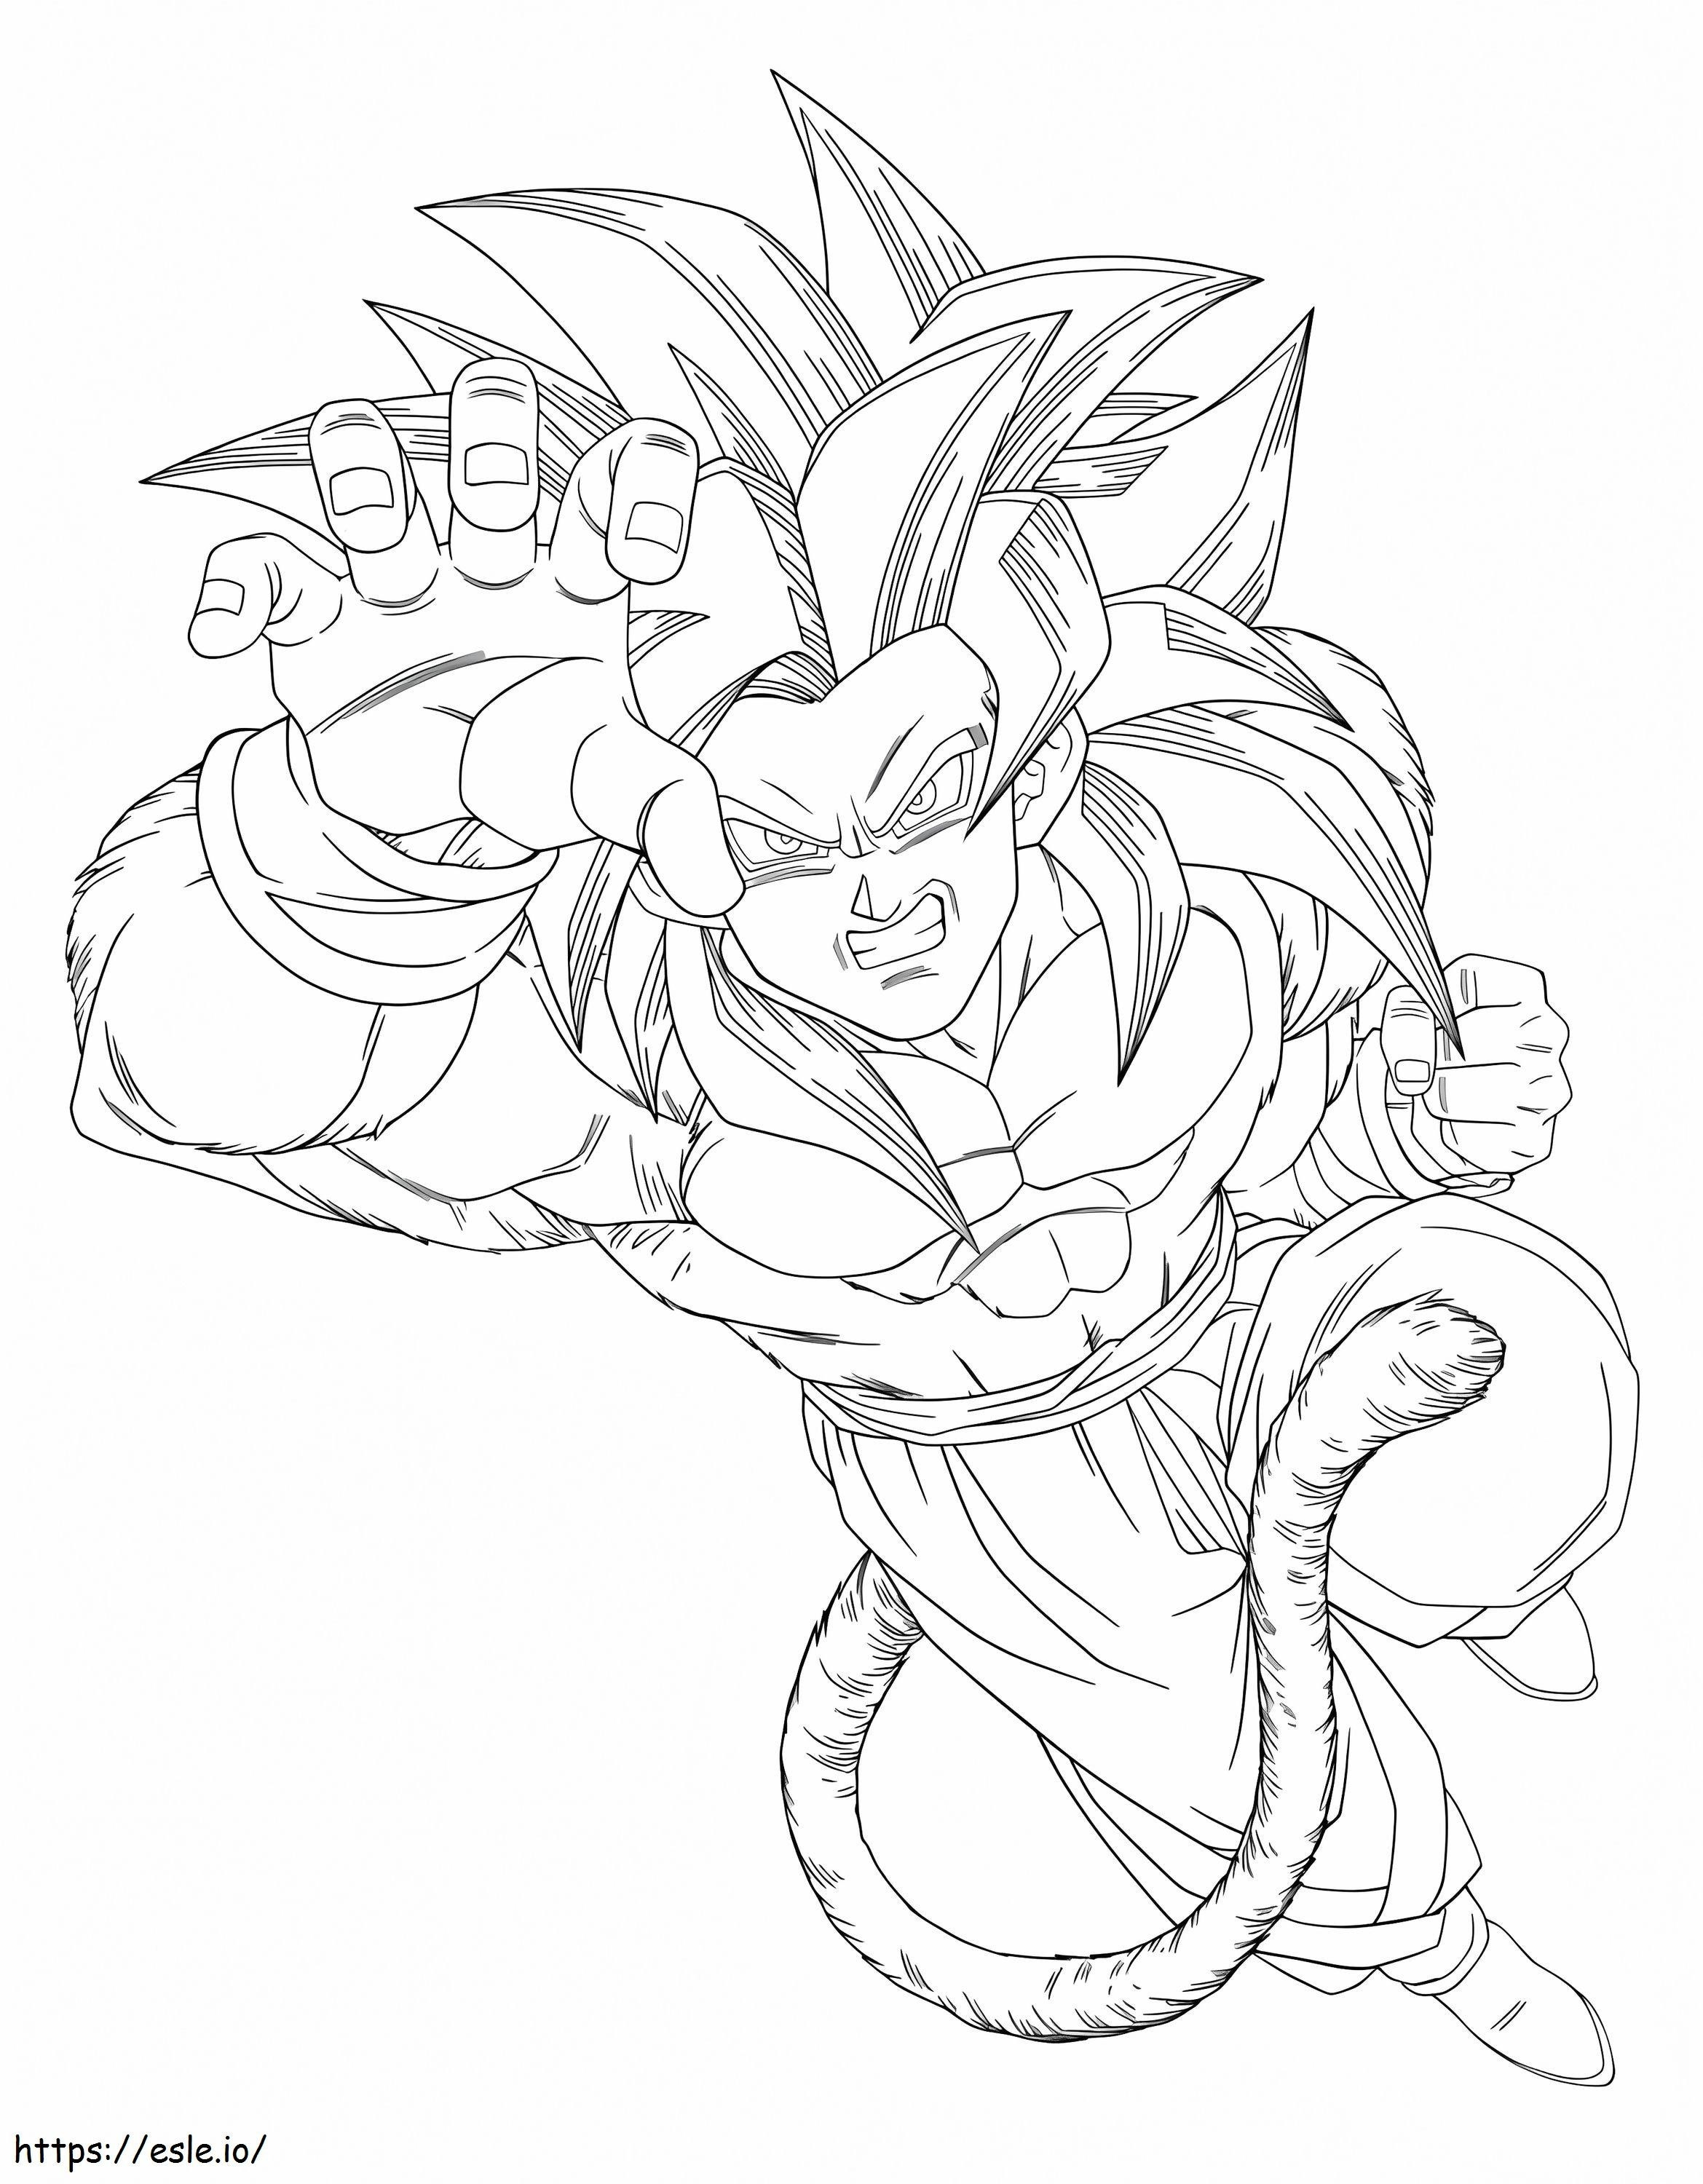 Coloriage Son Goku Super Saiyan 4 à imprimer dessin